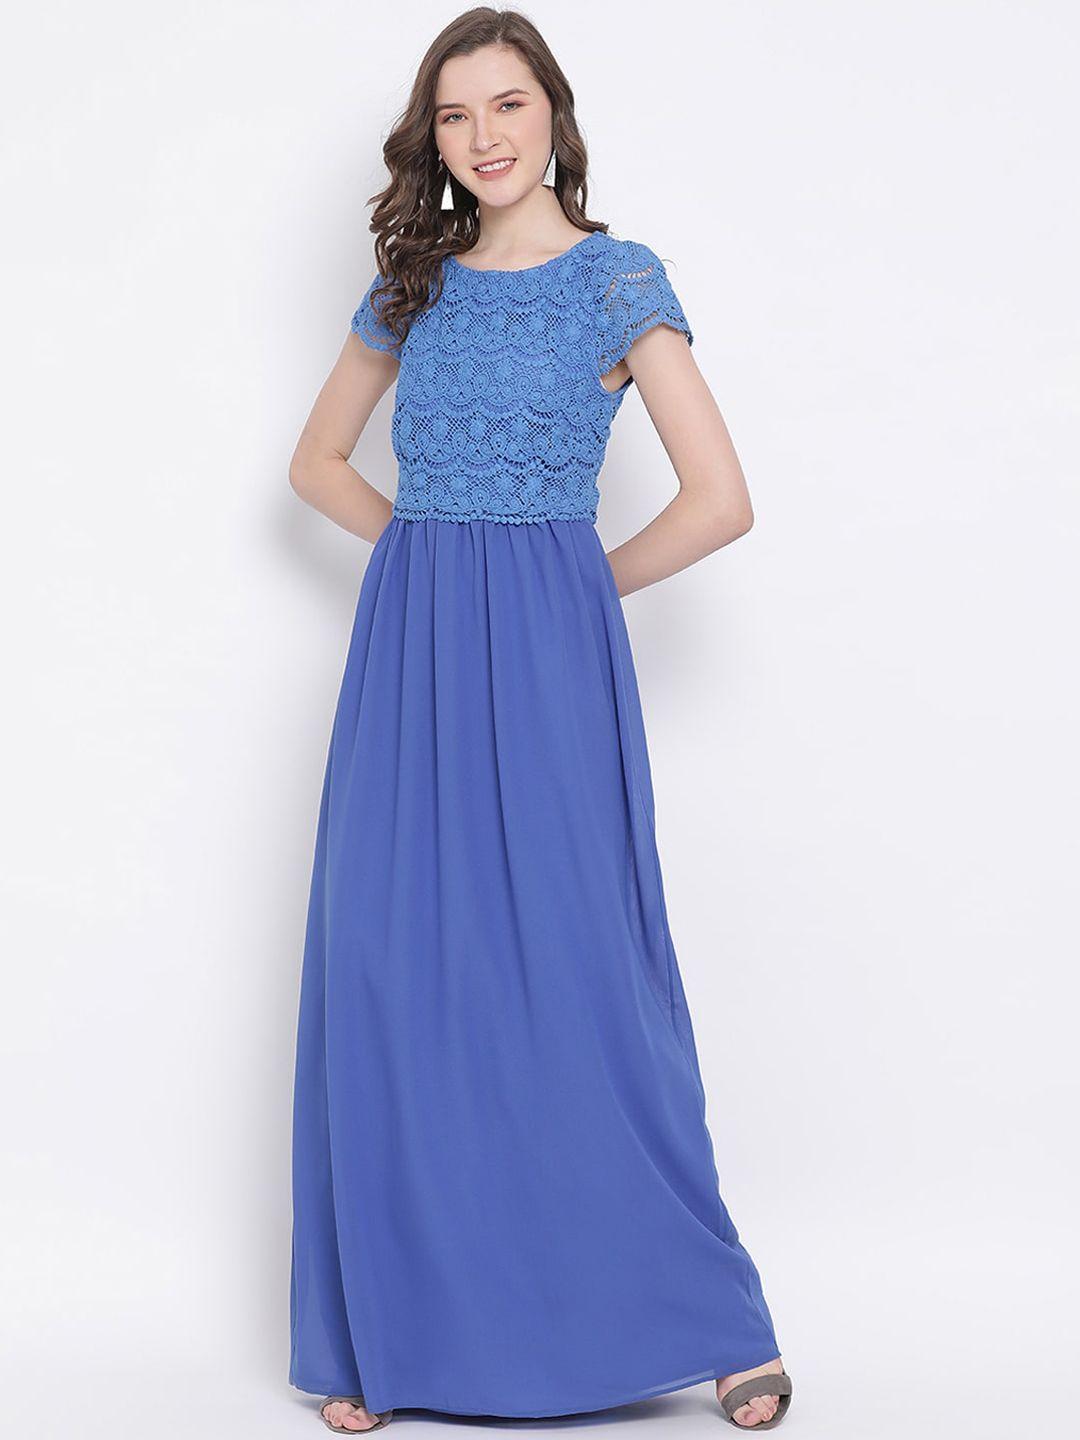 ly2 blue lace maxi dress